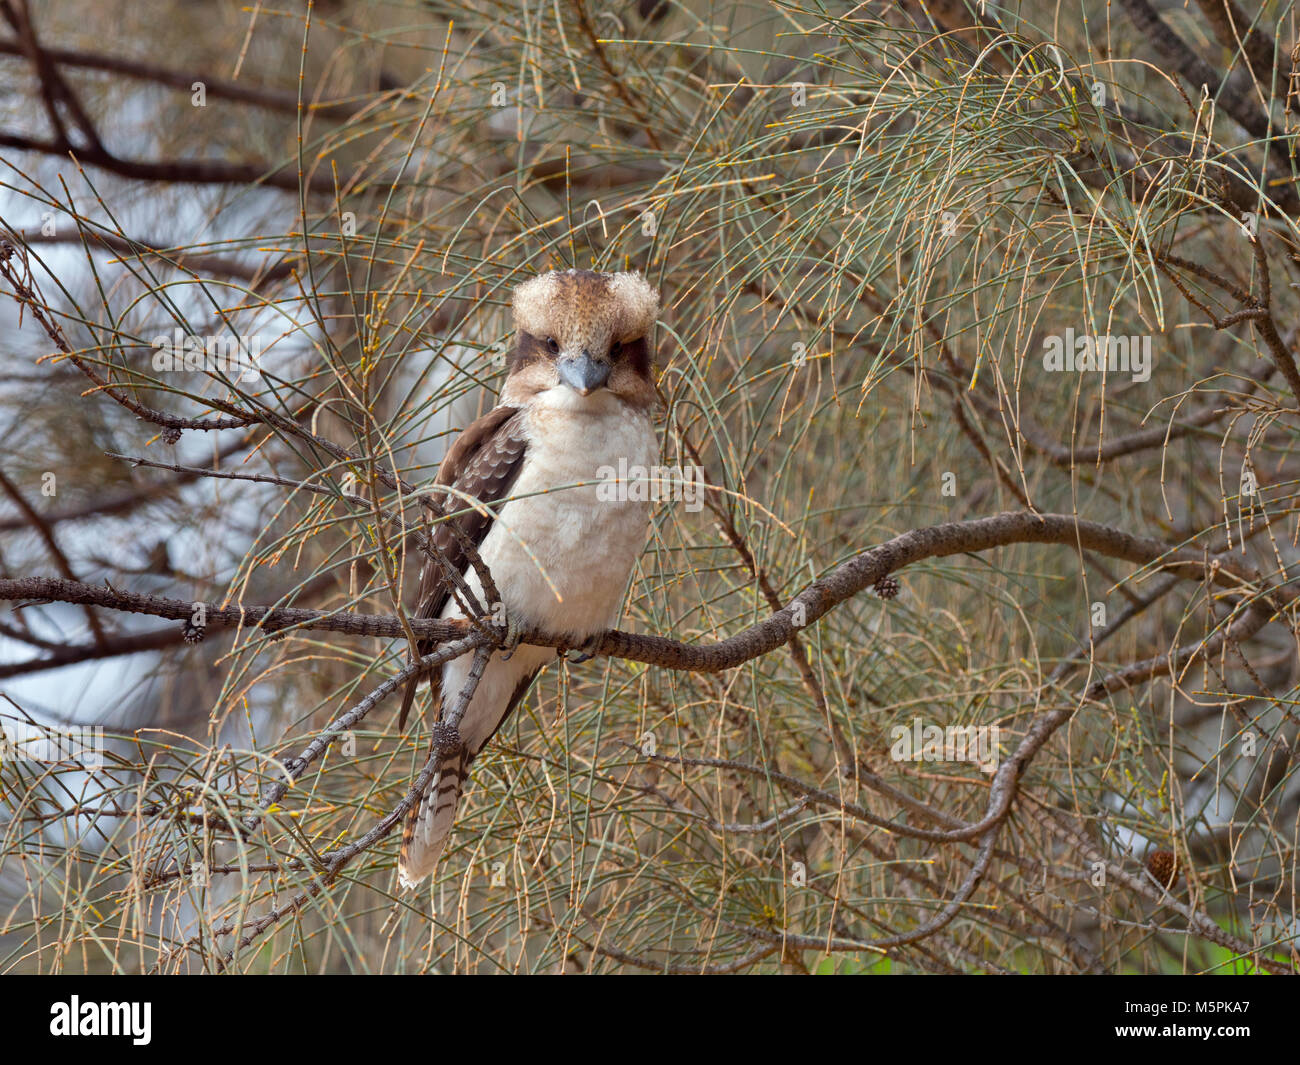 Kookaburra Dacelo novaeguineae also known as  Laughing kookaburra or Laughing jackass wating for prey Stock Photo